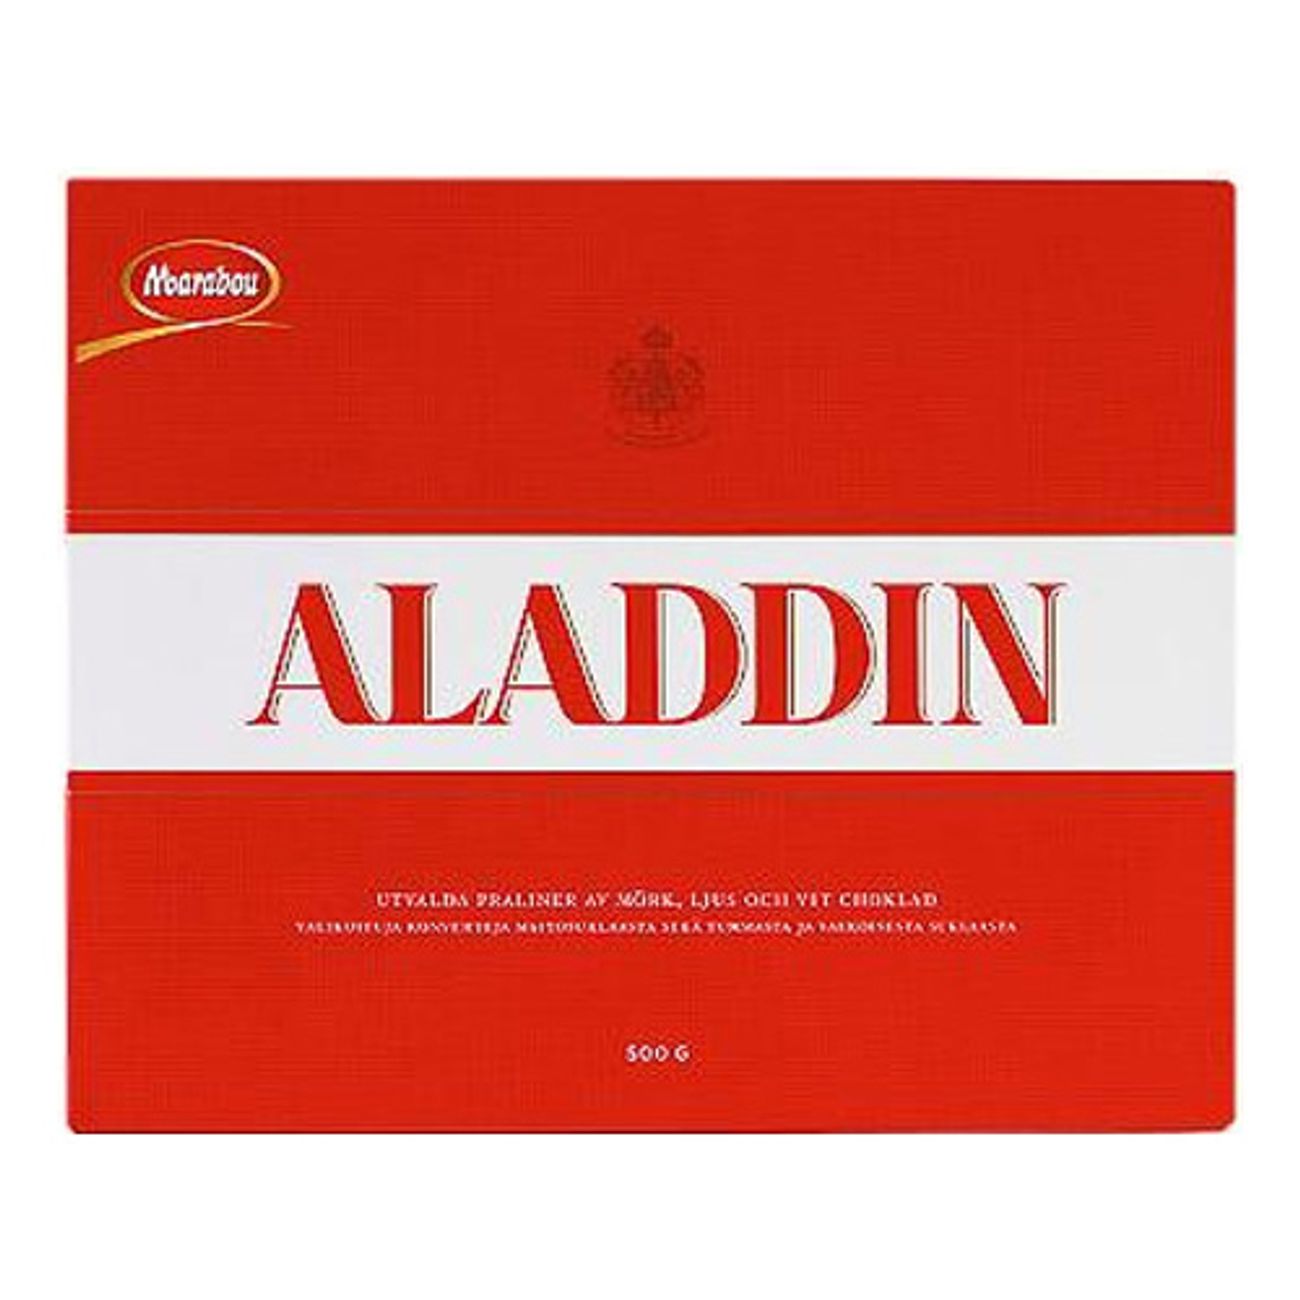 aladdin-ask-1